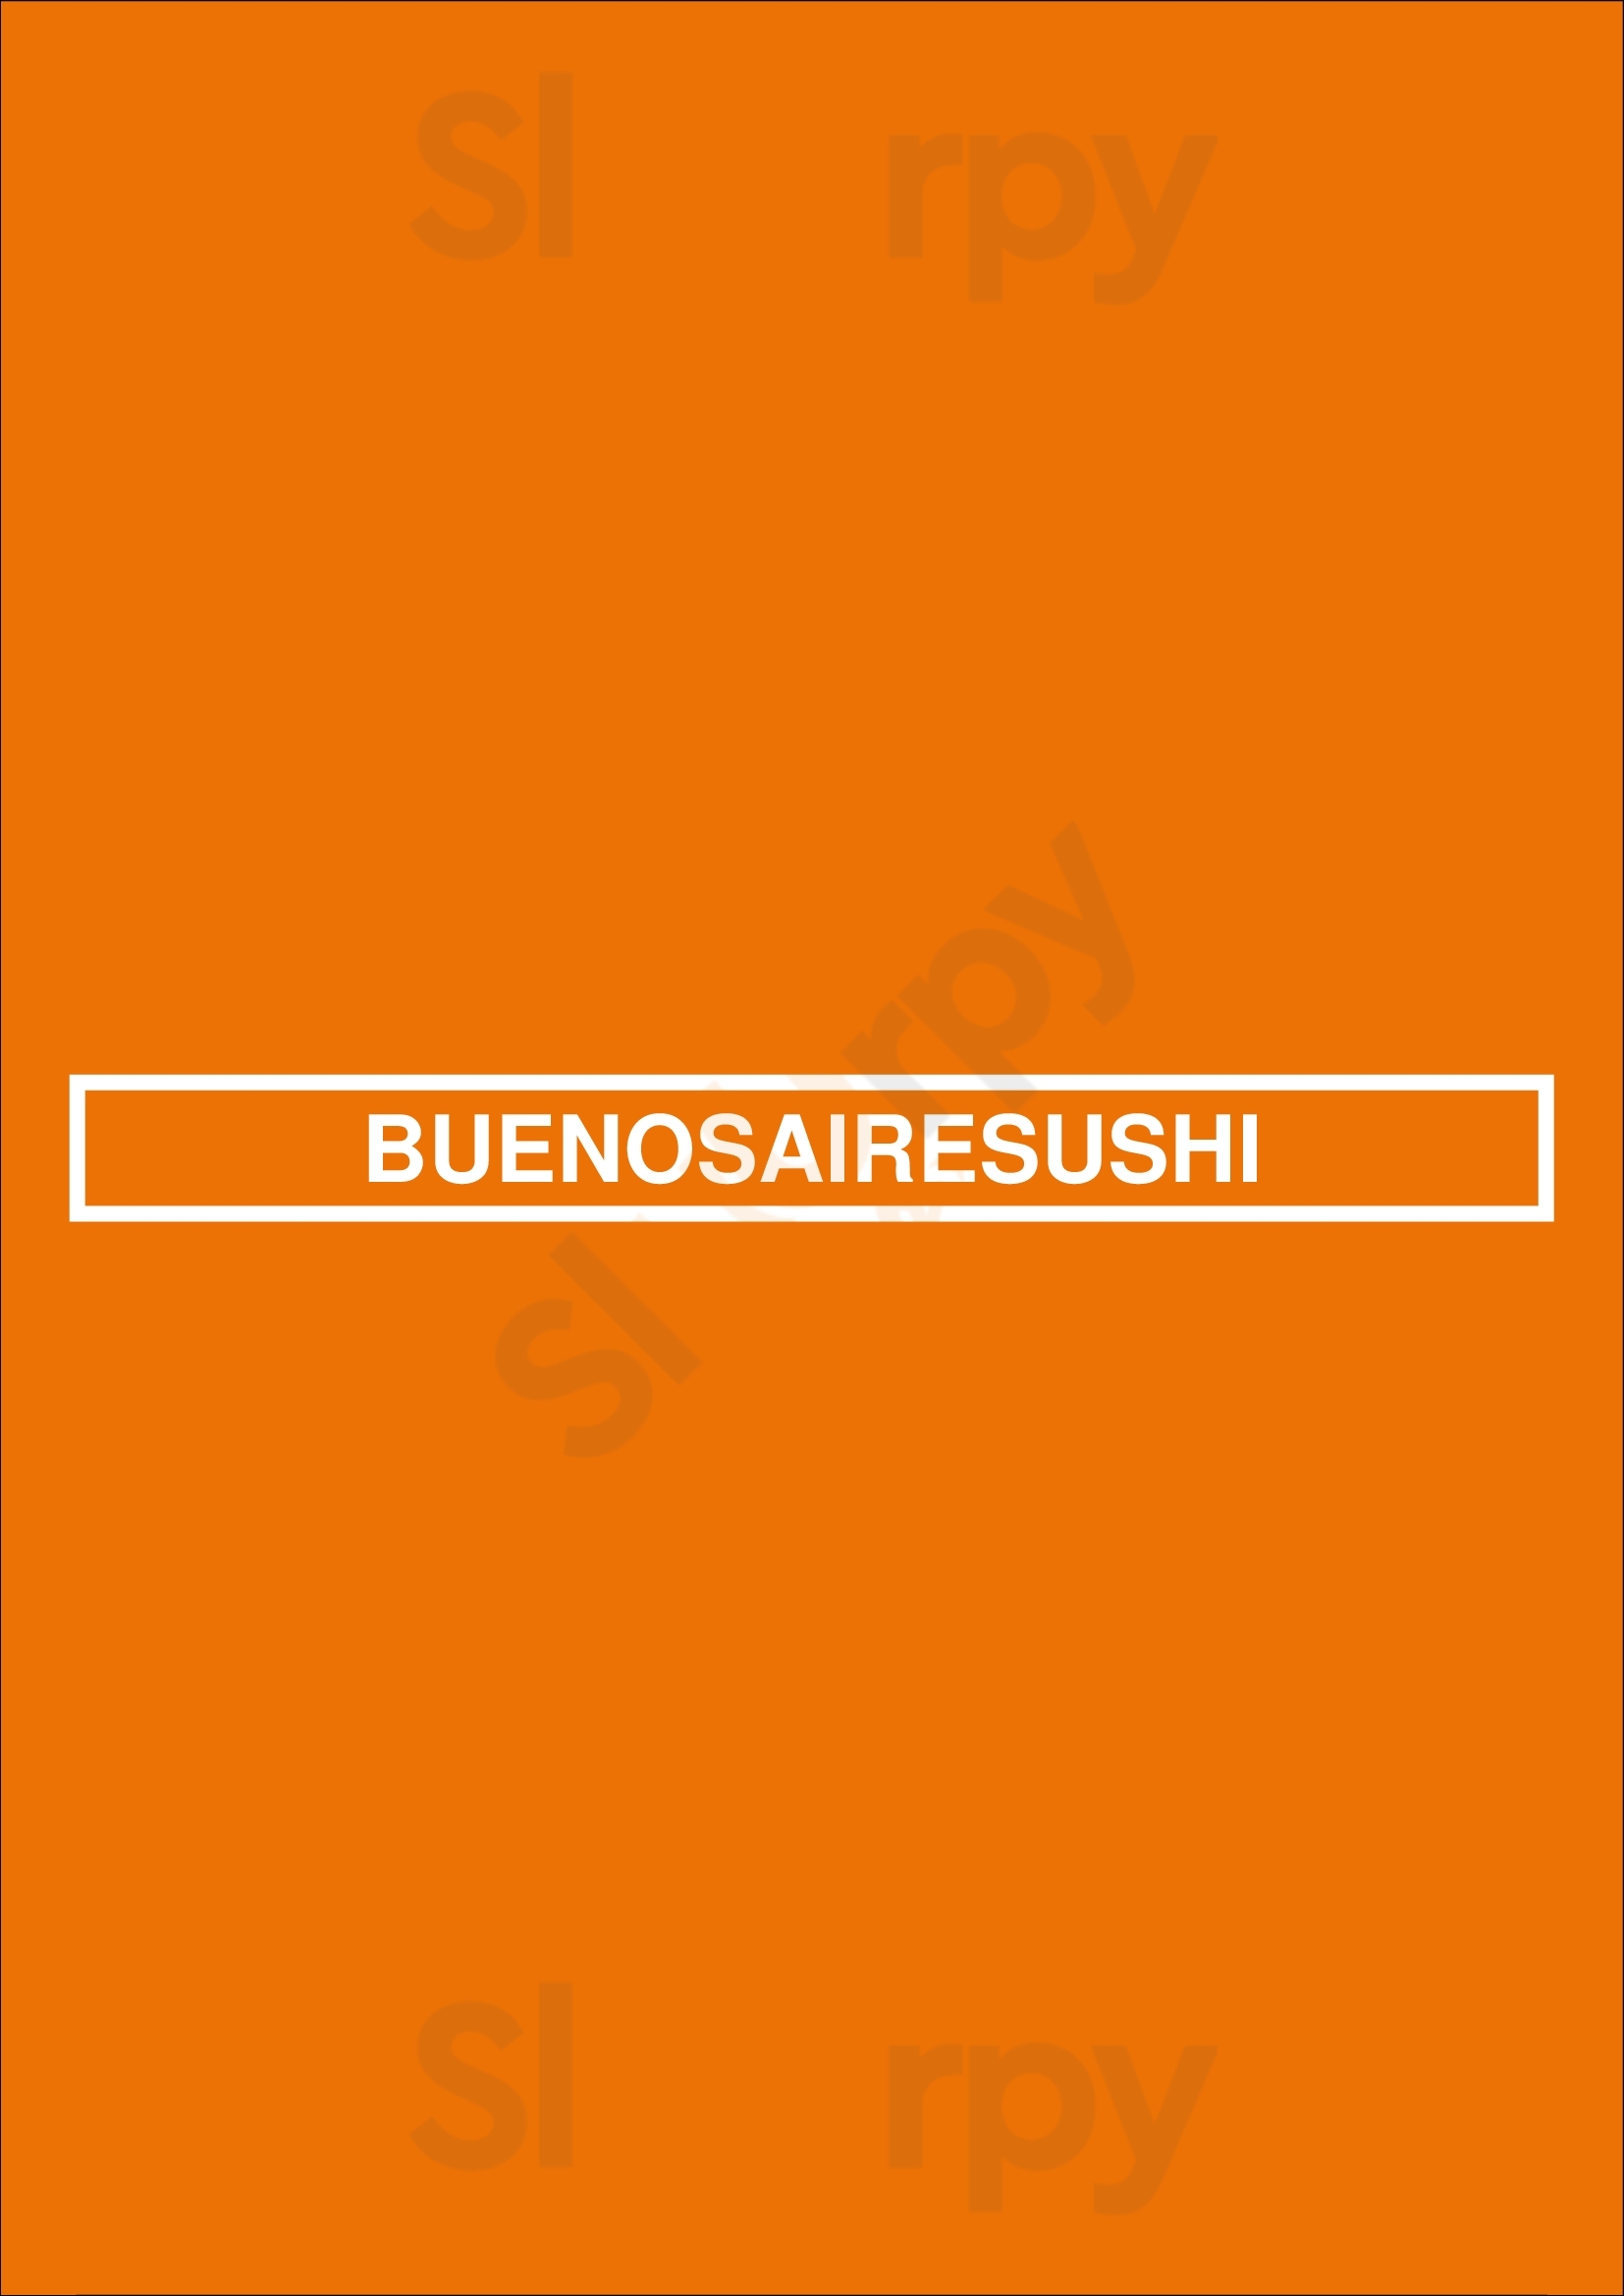 Buenosairesushi Buenos Aires Menu - 1